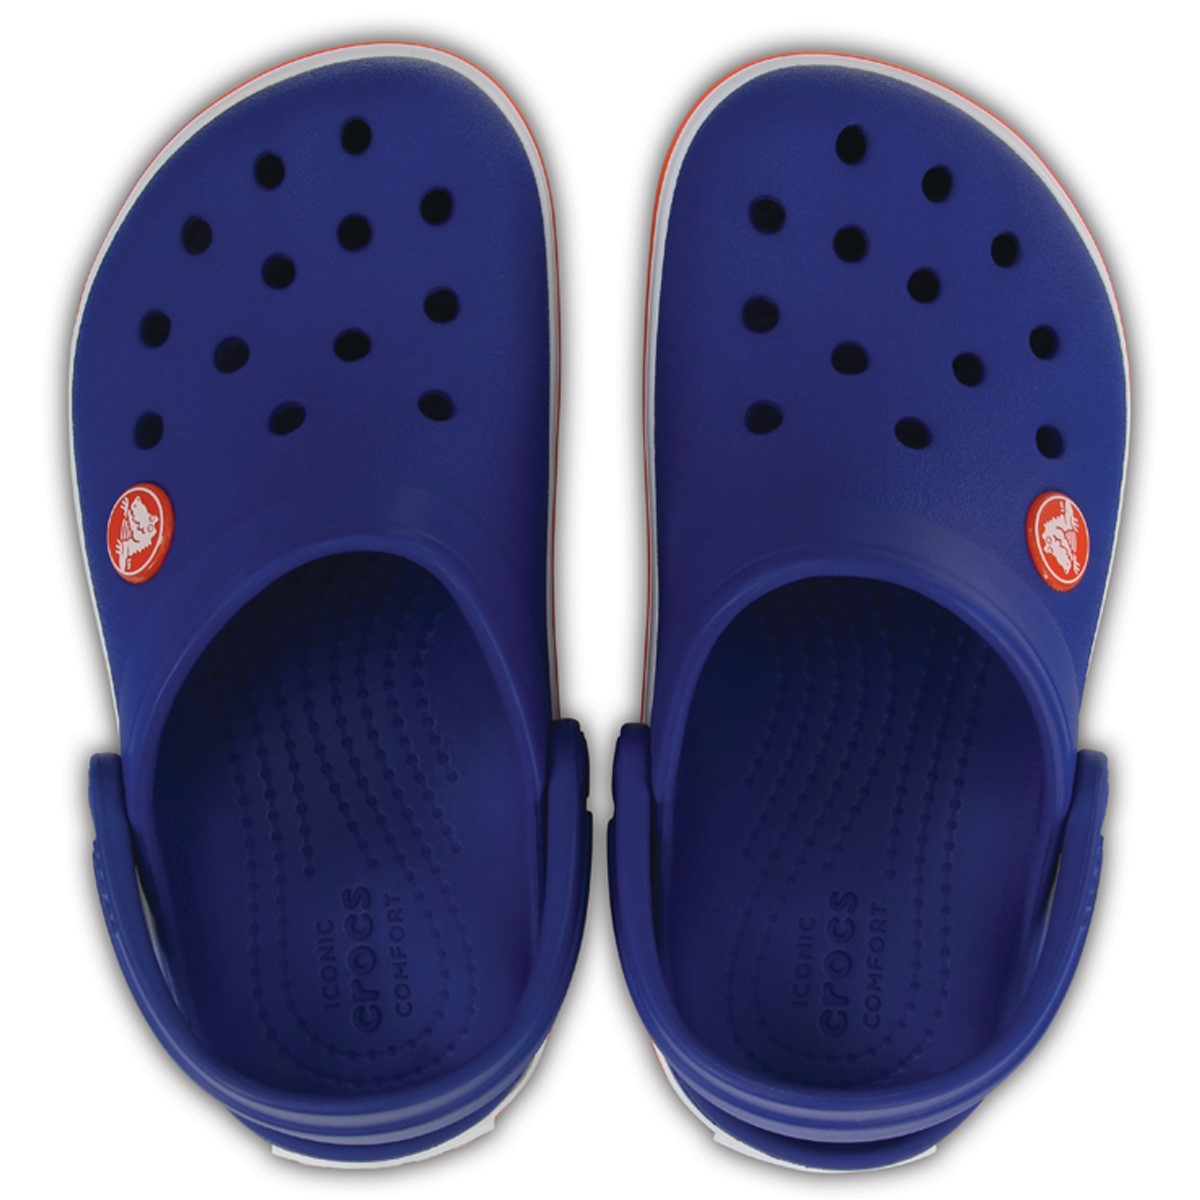 Crocs Sandalet 204537 Cerulean Blue